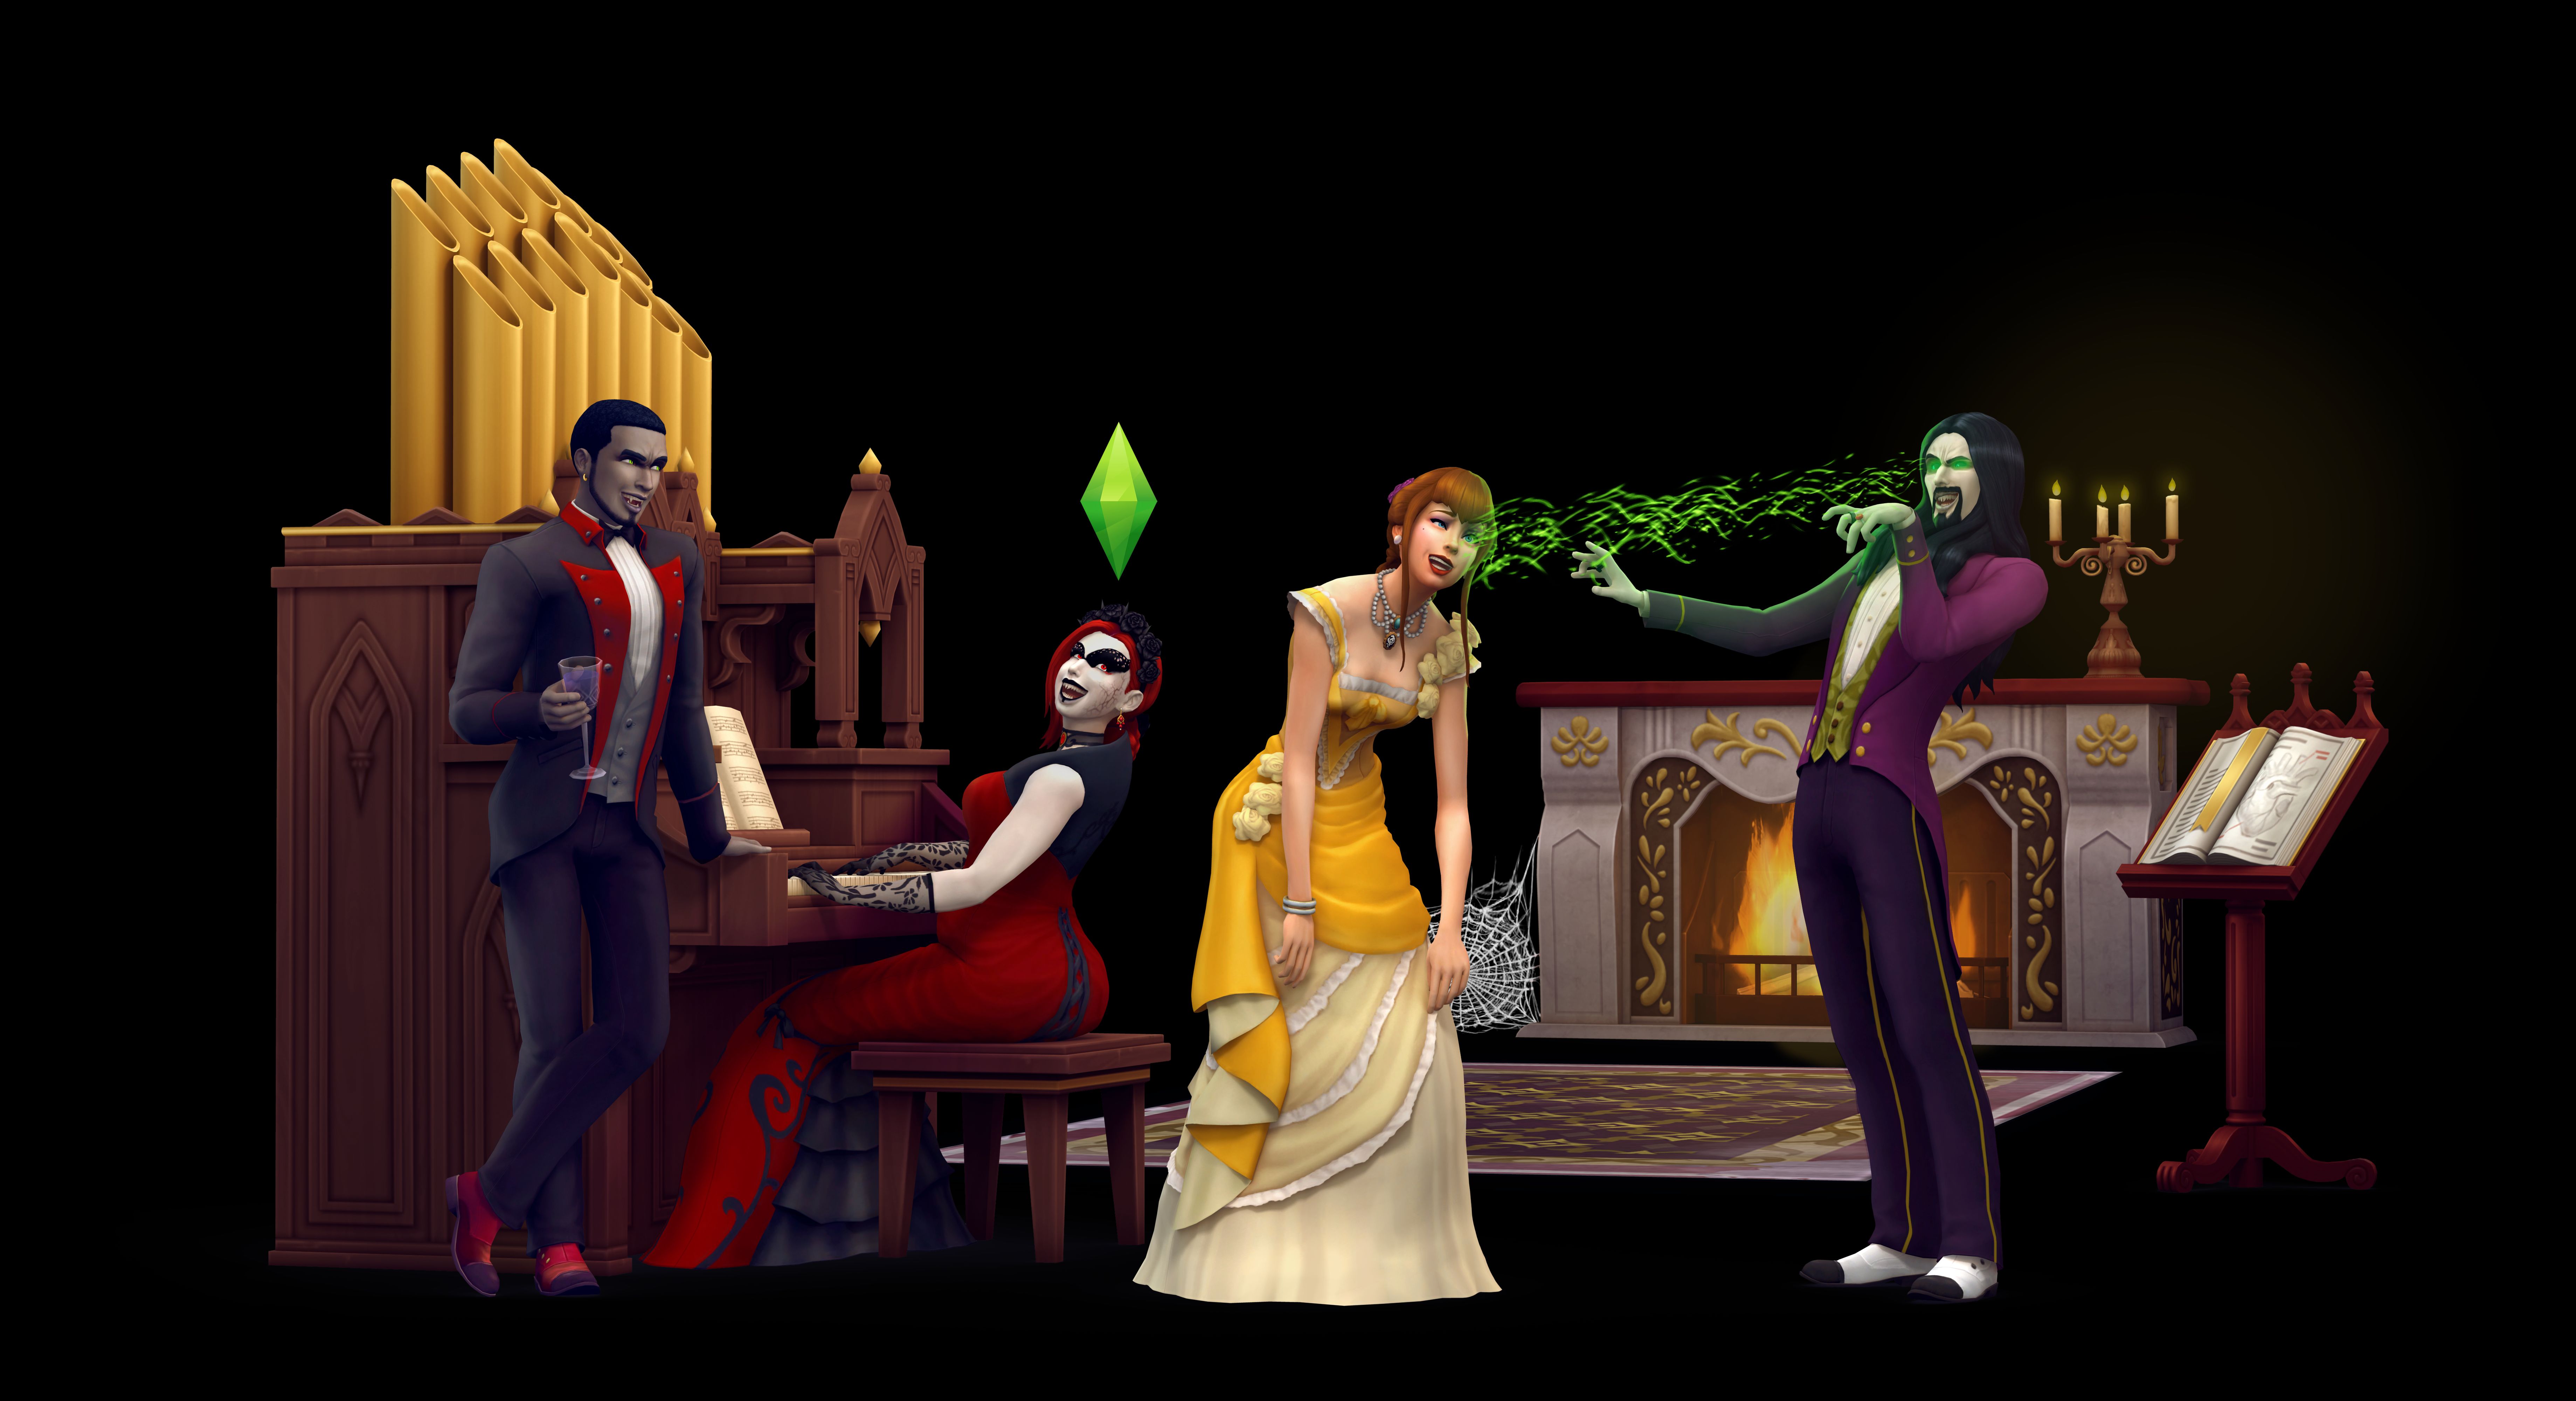 The Sims 4 Vampire Pack Βρυκόλακες θα σας πιουν το αίμα Gaming